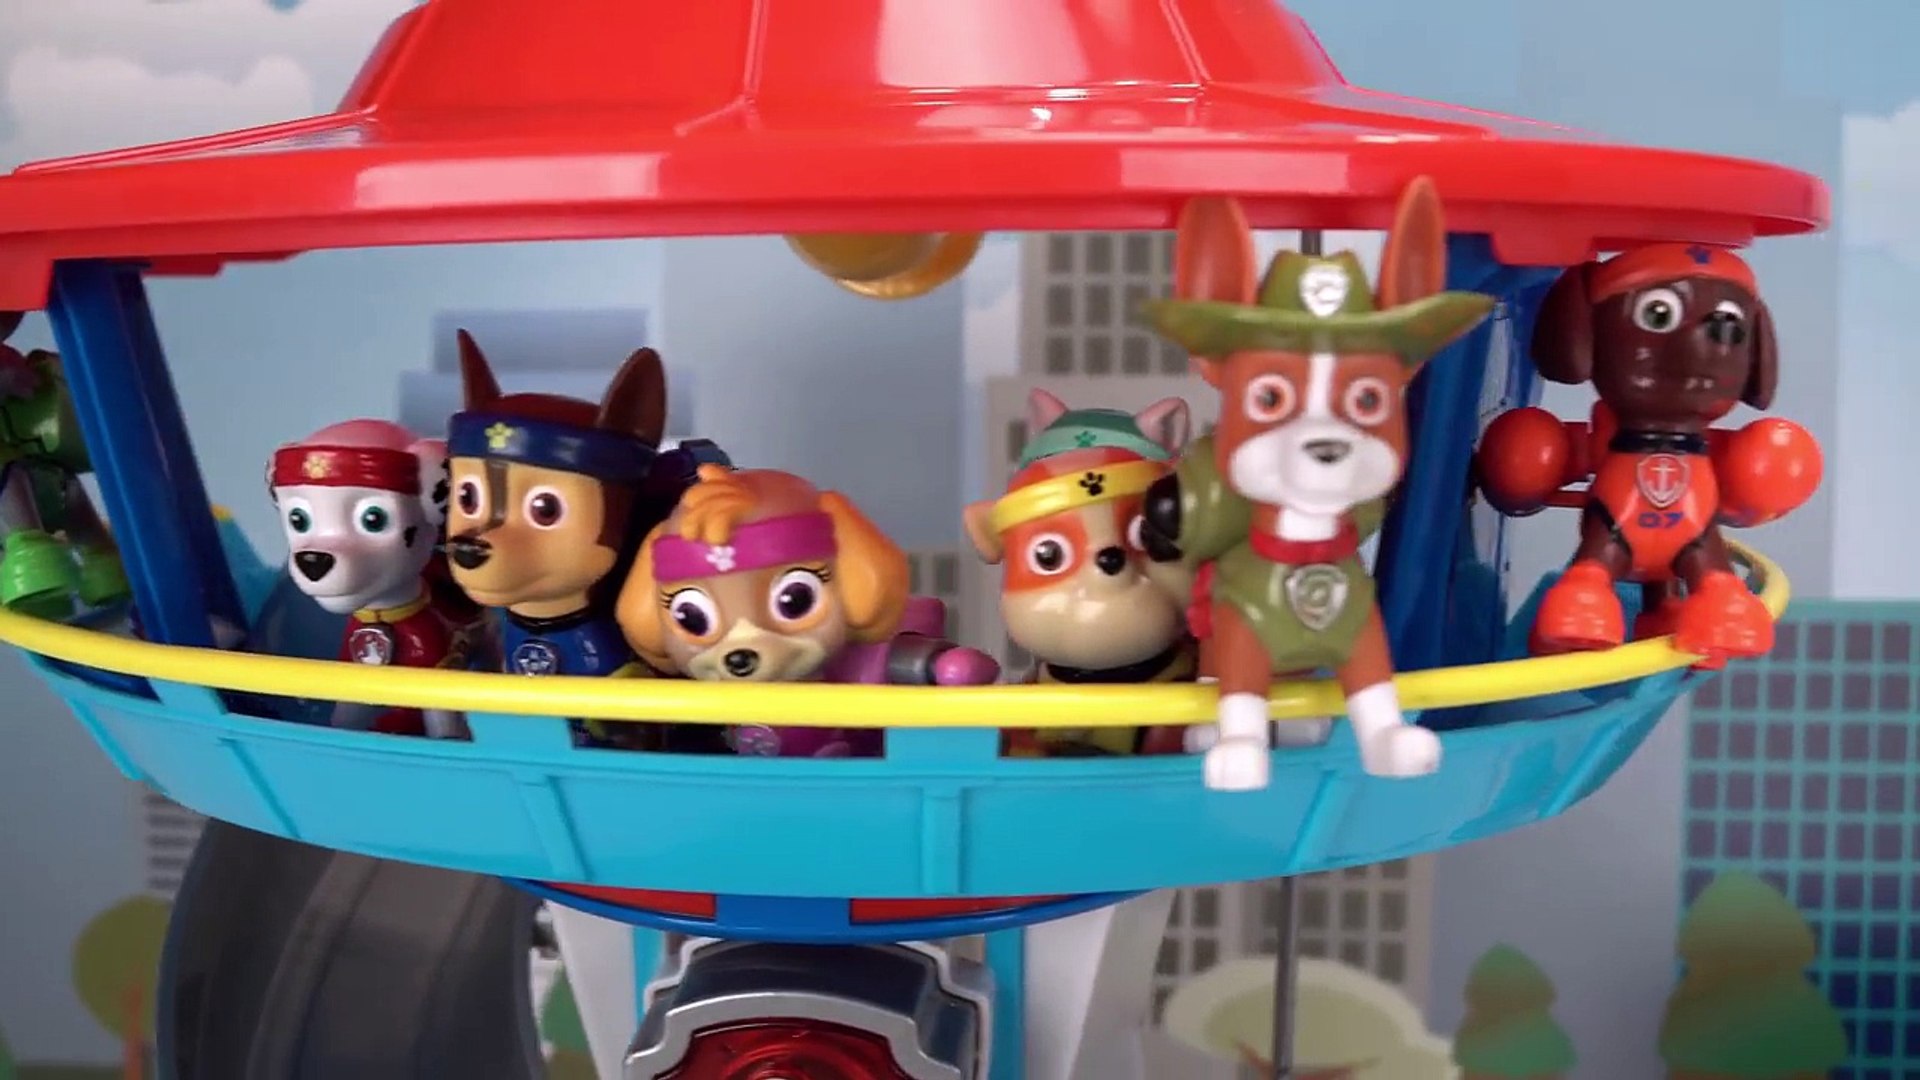 paw patrol toy videos for kids